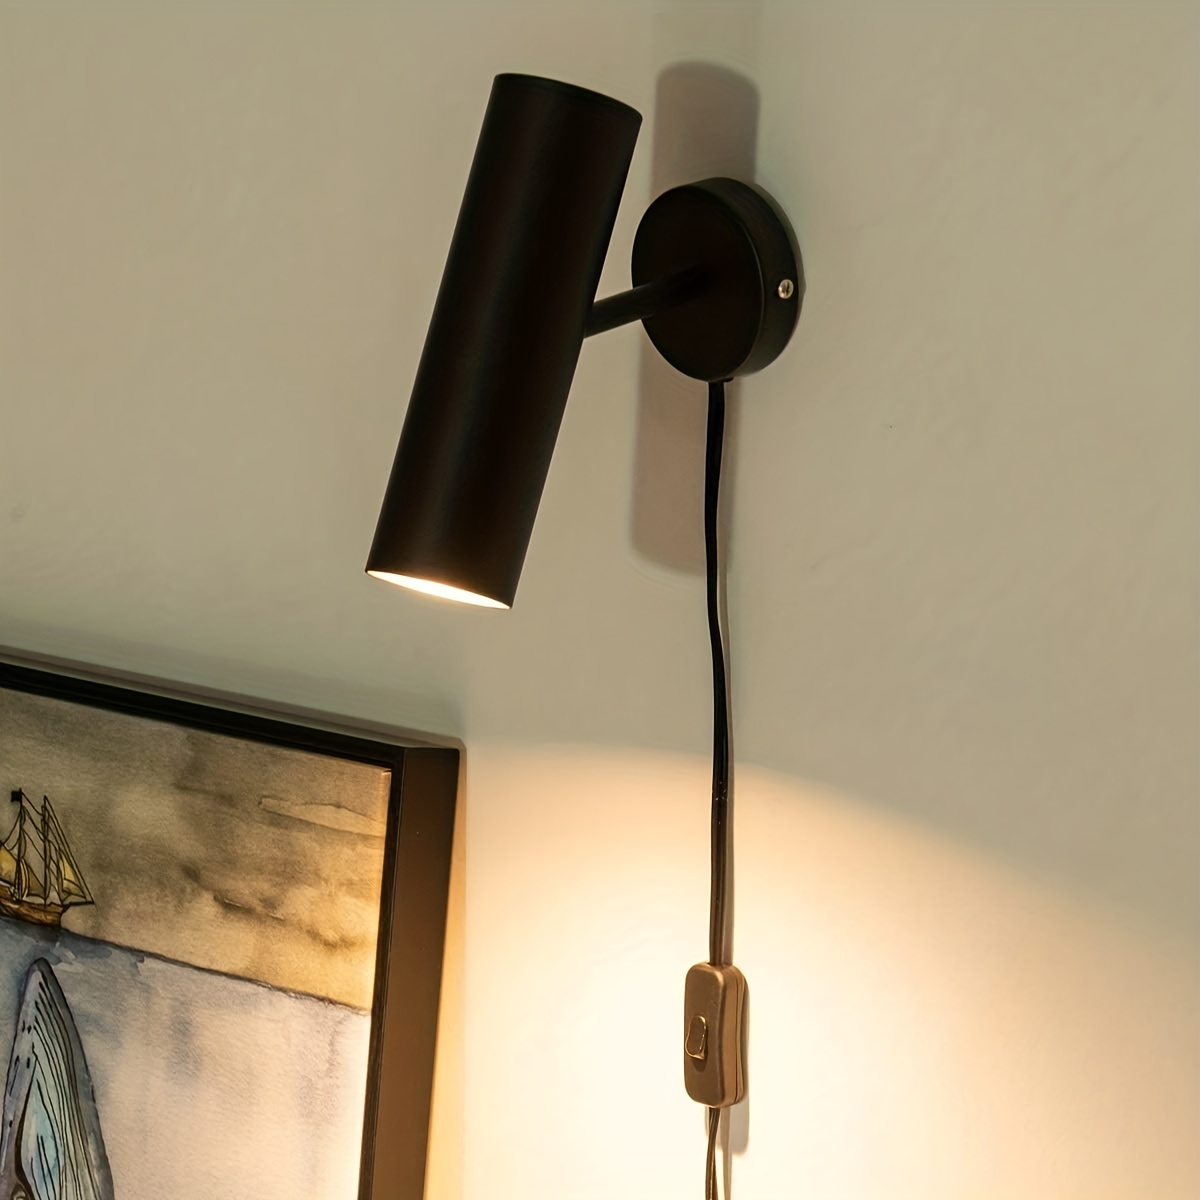 1pc Adjustable Vintage Wall Sconce with Plug in Cord, Metal Industrial Wall Light Fixture for Bedside, Bedroom, Living Room Indoor Lighting, Black